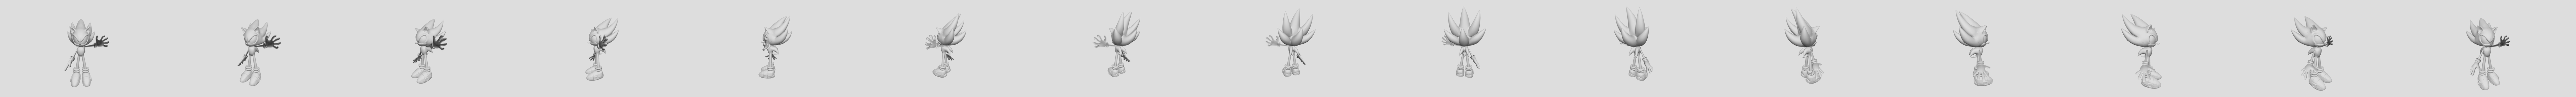 Fleetway Super Sonic - 3D model by Pikachar1274567 (@pikacharbutag